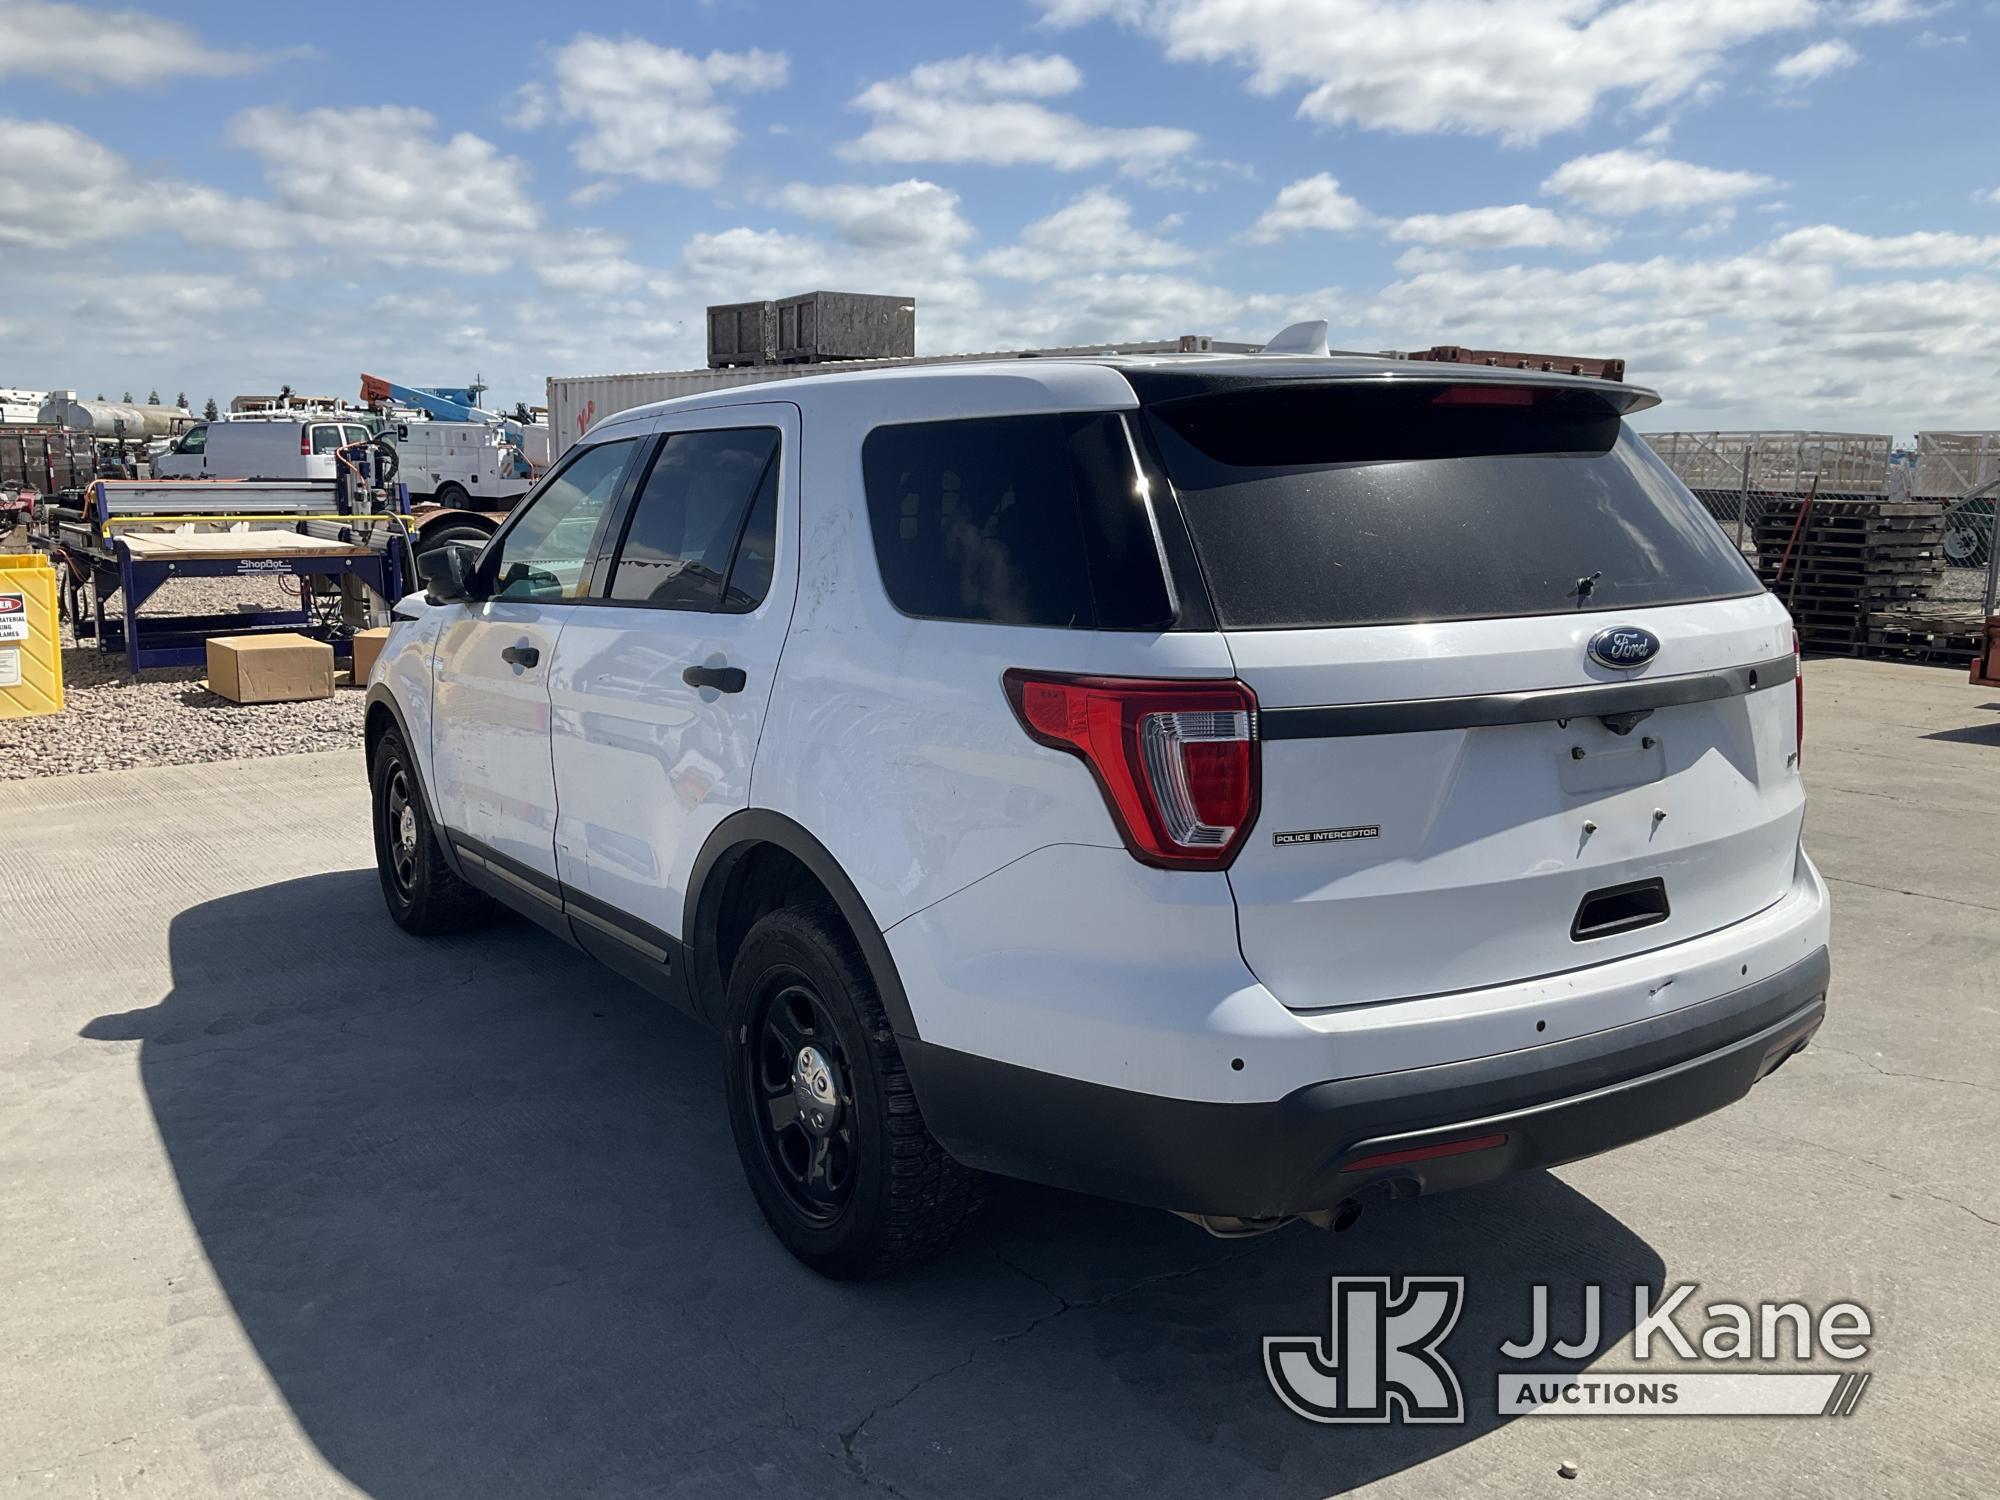 (Dixon, CA) 2017 Ford Explorer AWD Police Interceptor 4-Door Sport Utility Vehicle Not Running. Wrec